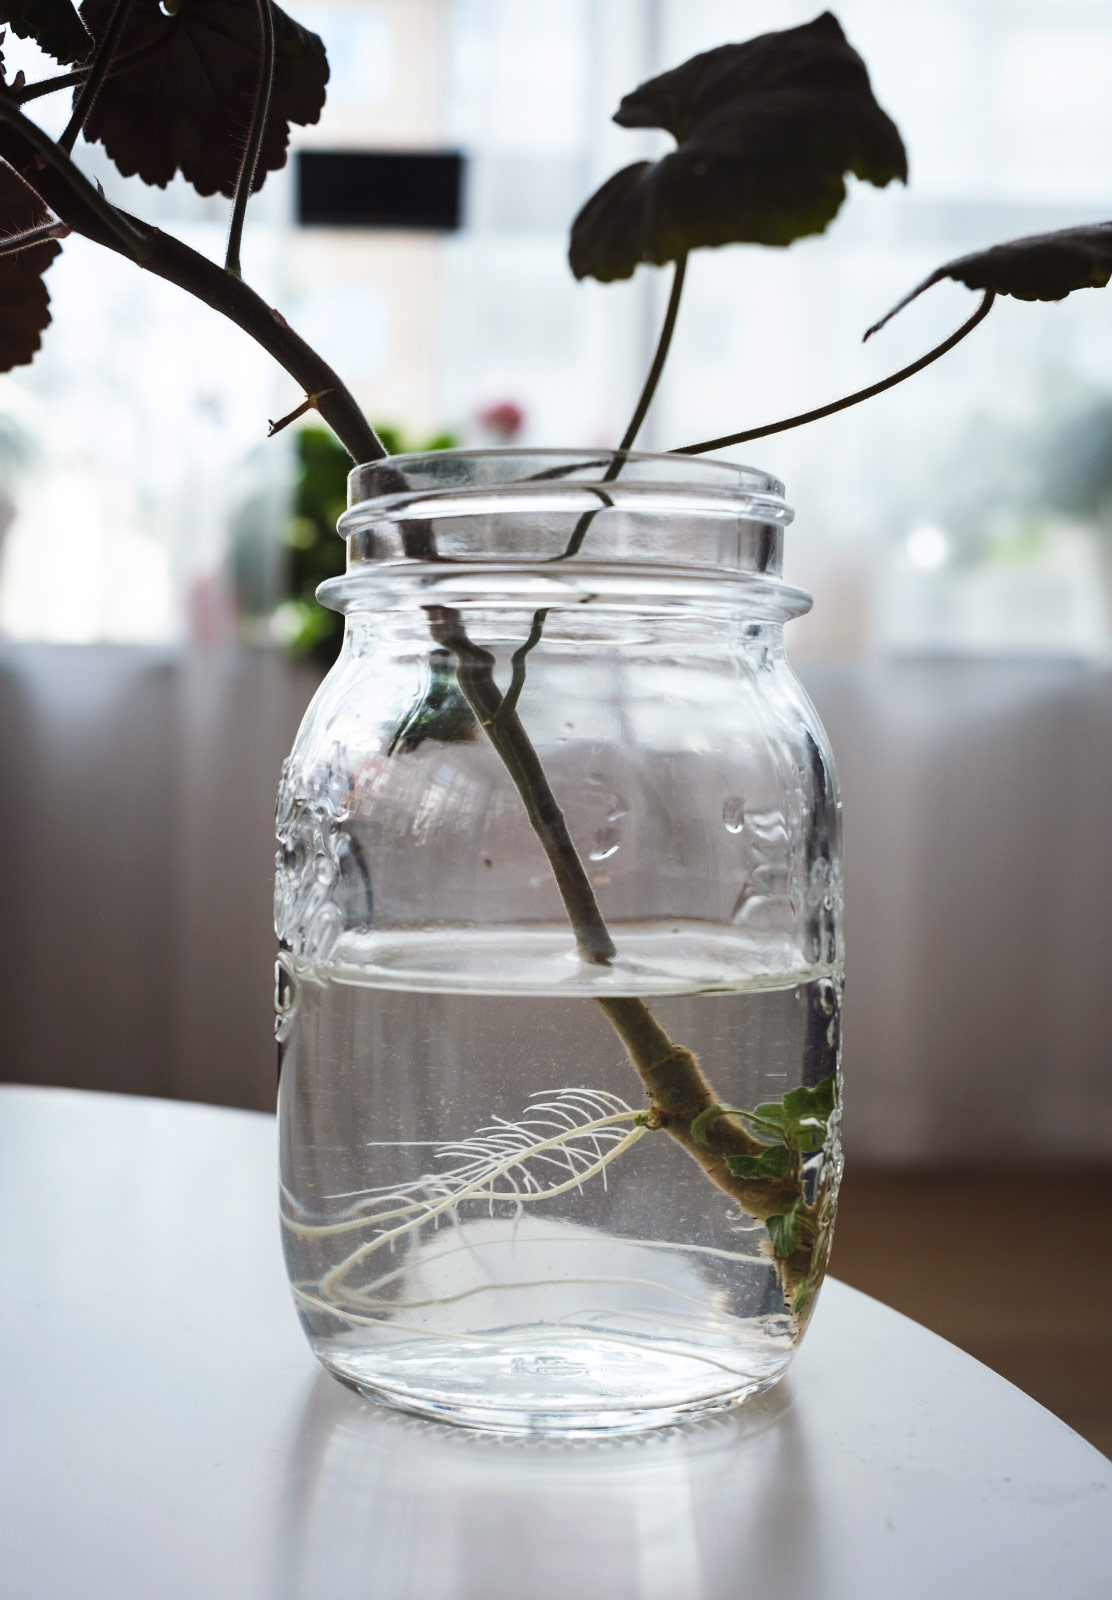 Roots growing in jar